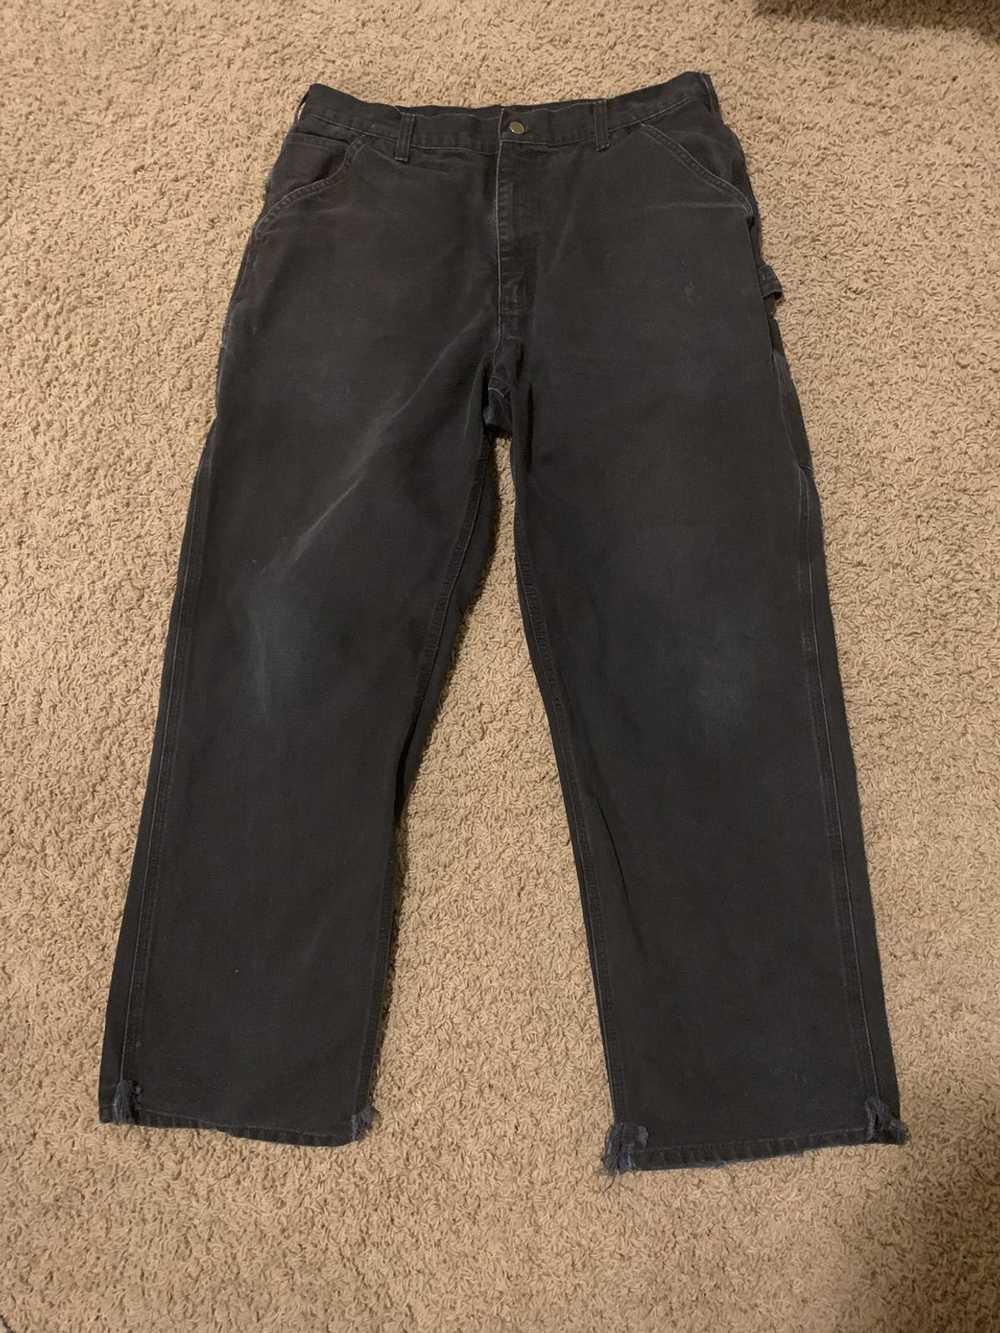 Carhartt × Vintage Vintage Carhartt Black pants - image 1